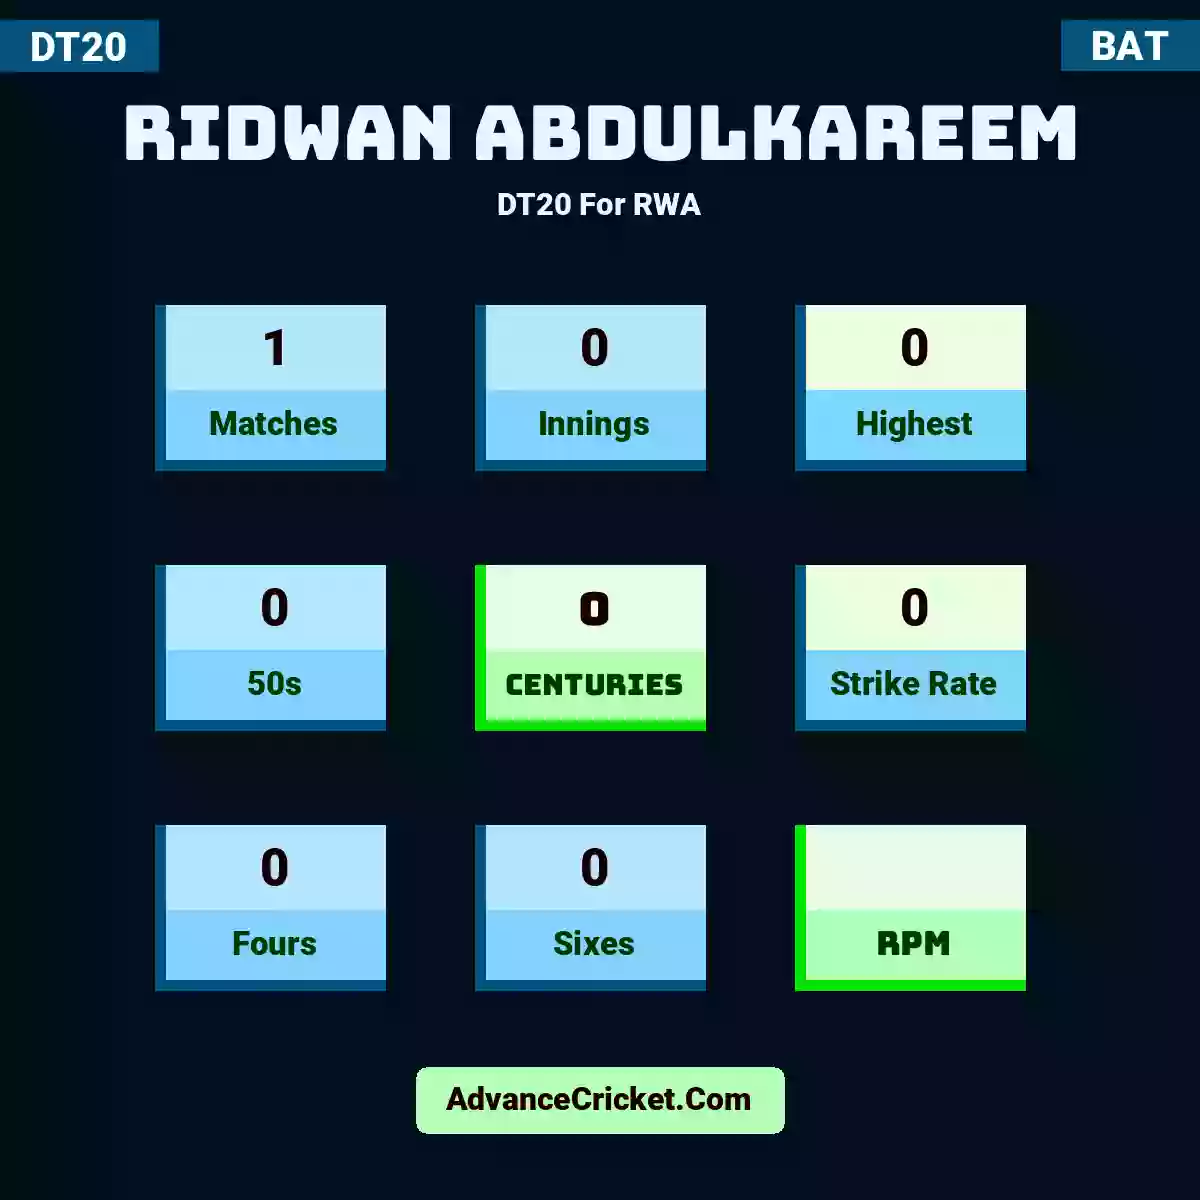 Ridwan Abdulkareem DT20  For RWA, Ridwan Abdulkareem played 1 matches, scored 0 runs as highest, 0 half-centuries, and 0 centuries, with a strike rate of 0. R.Abdulkareem hit 0 fours and 0 sixes.